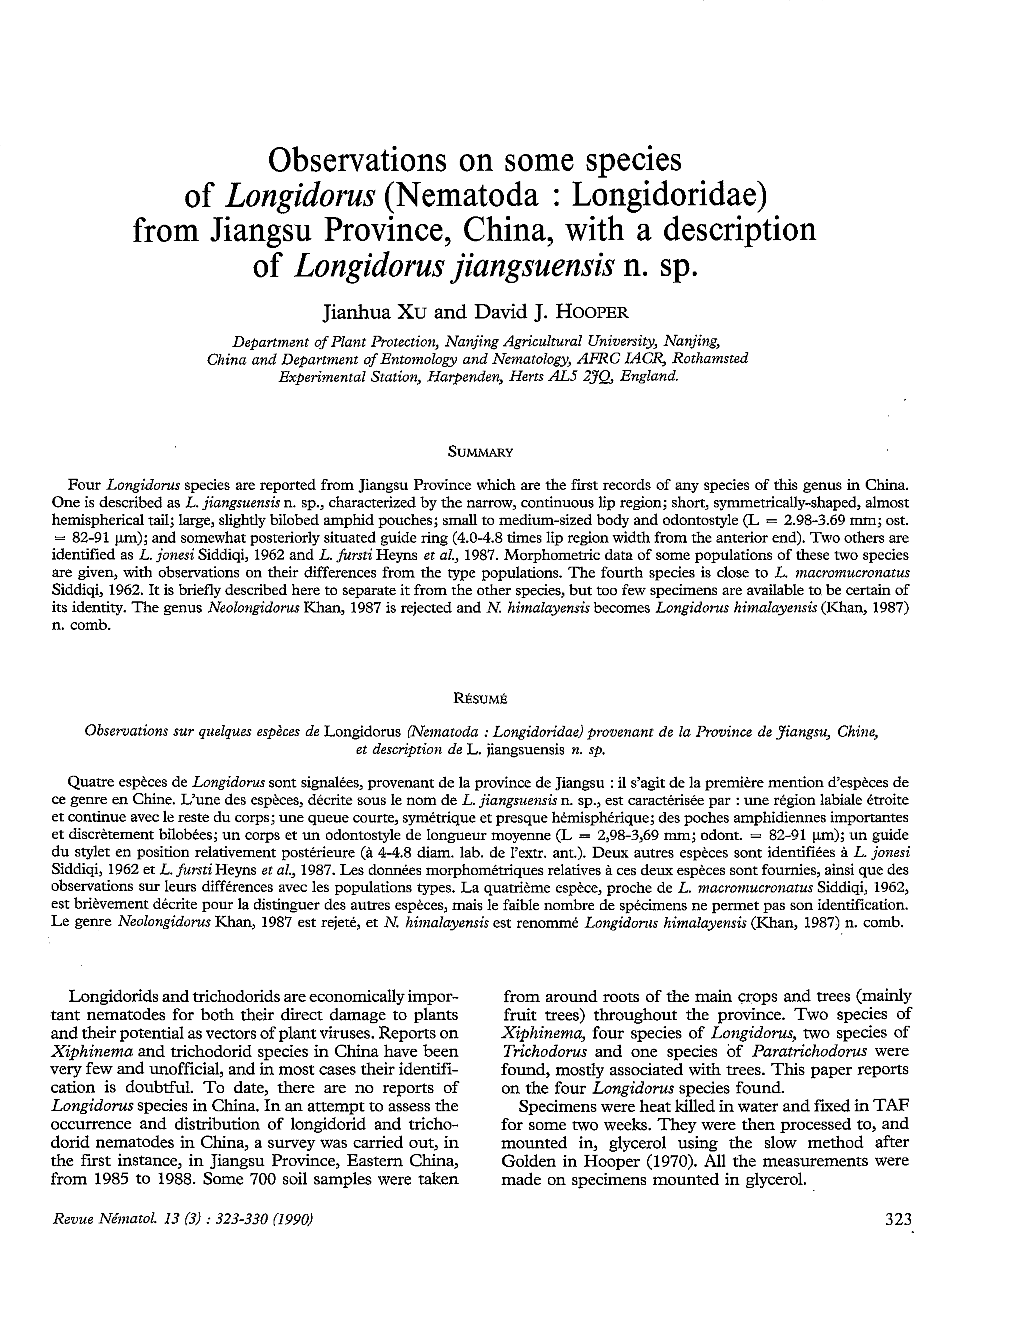 Observations on Some Species of Longidorus (Nematoda : Longidoridae) from Jiangsu Province, China, with a Description of Longidorus Jiangsuensis N